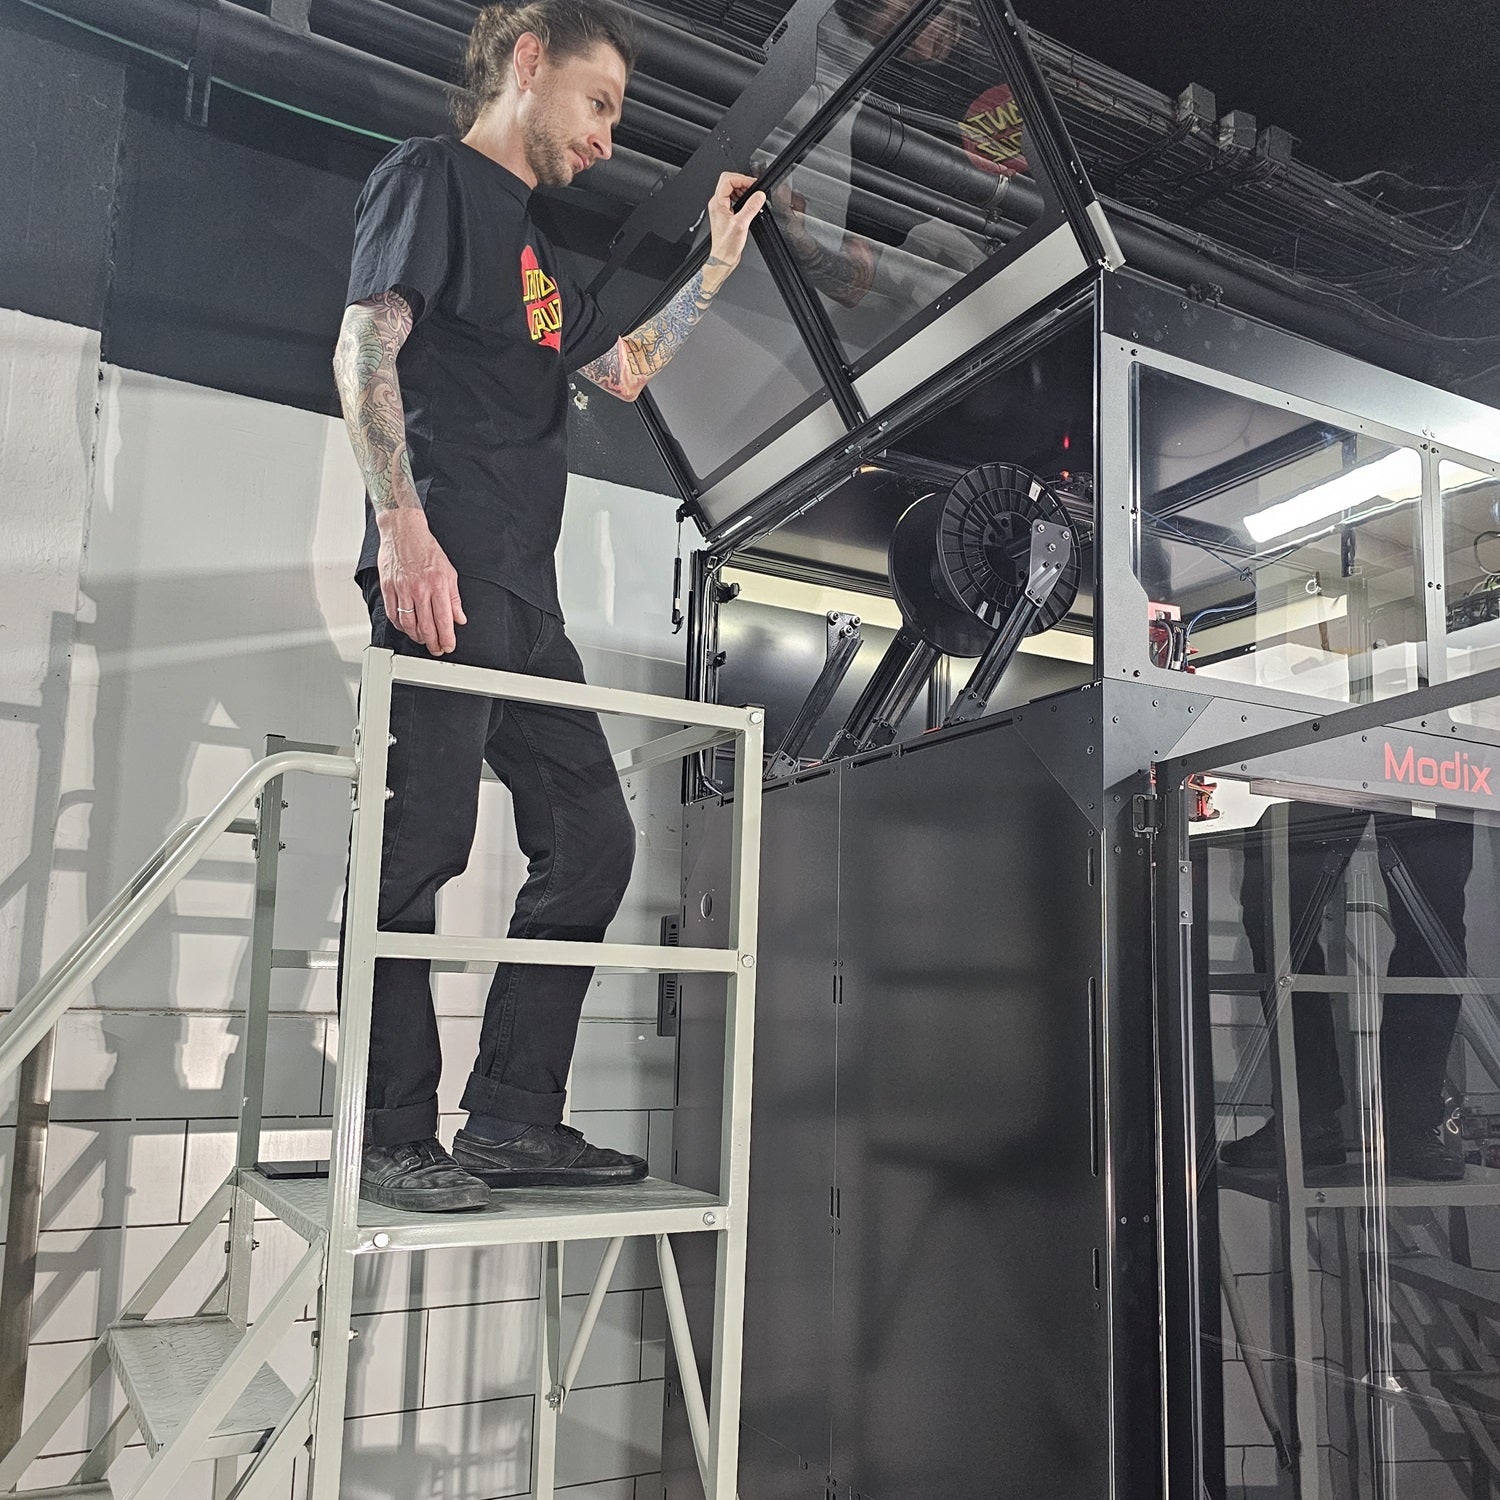 Guy on ladder